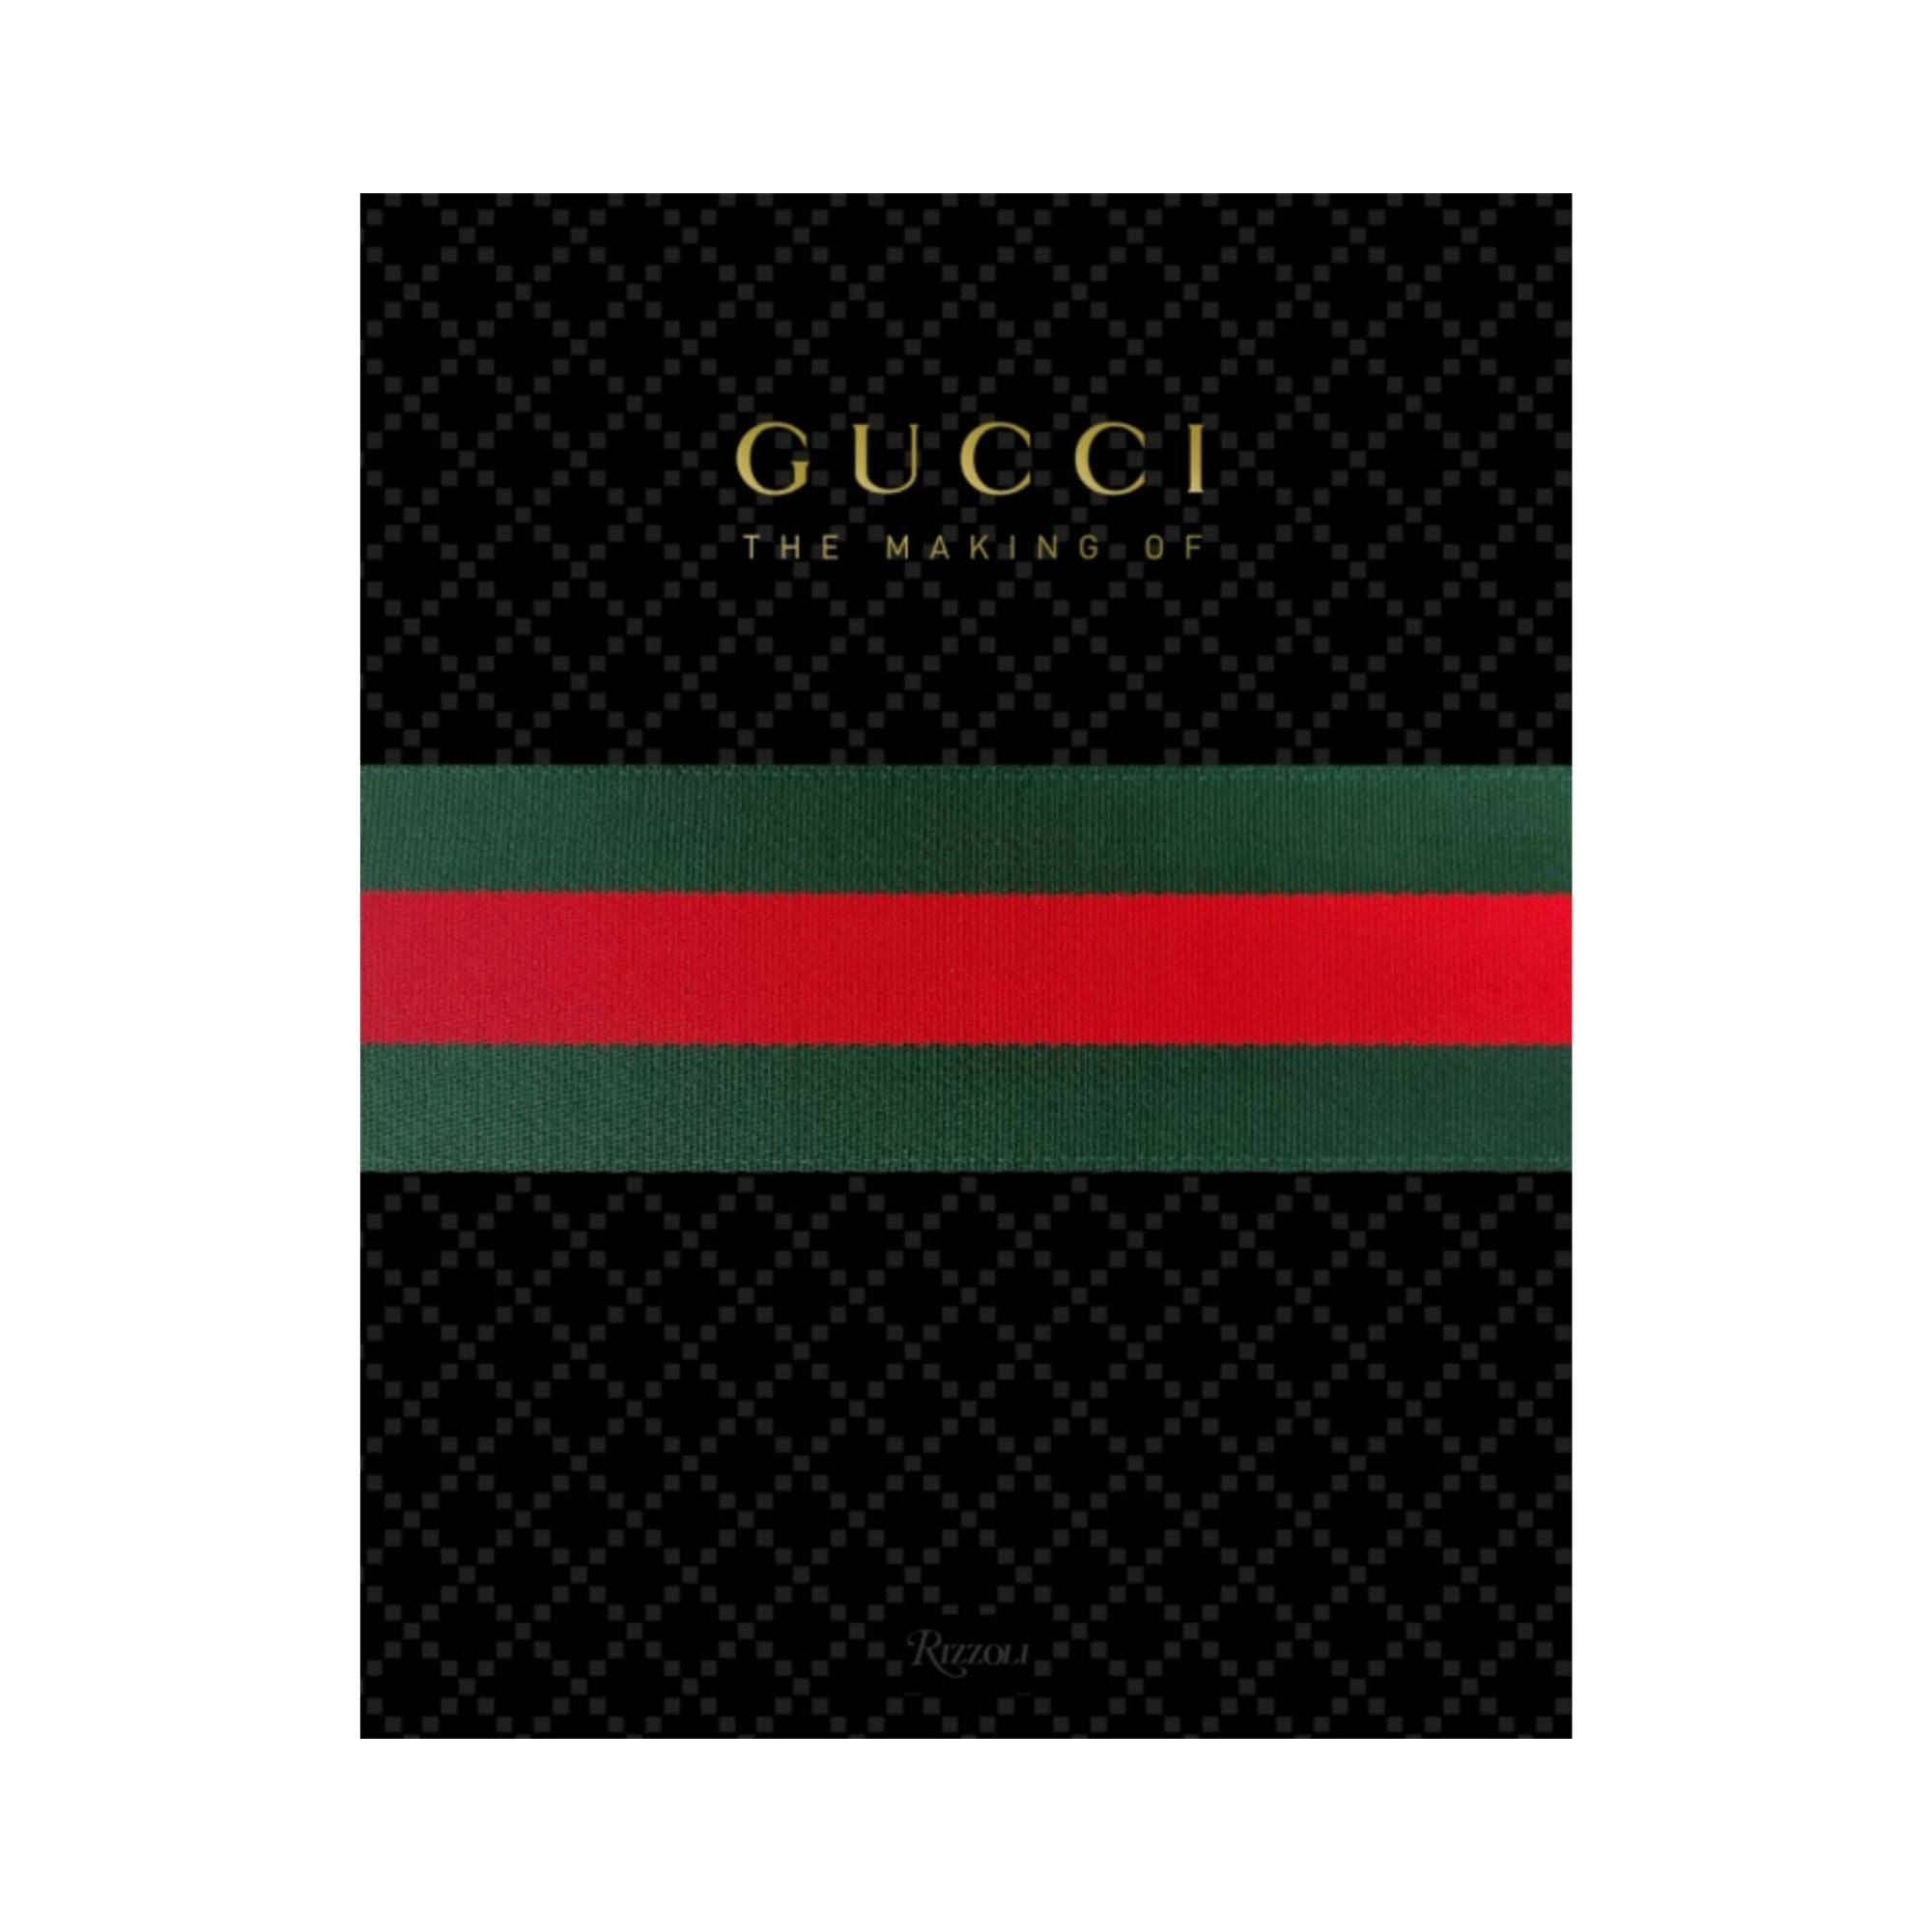 Gucci - THAT COOL LIVING